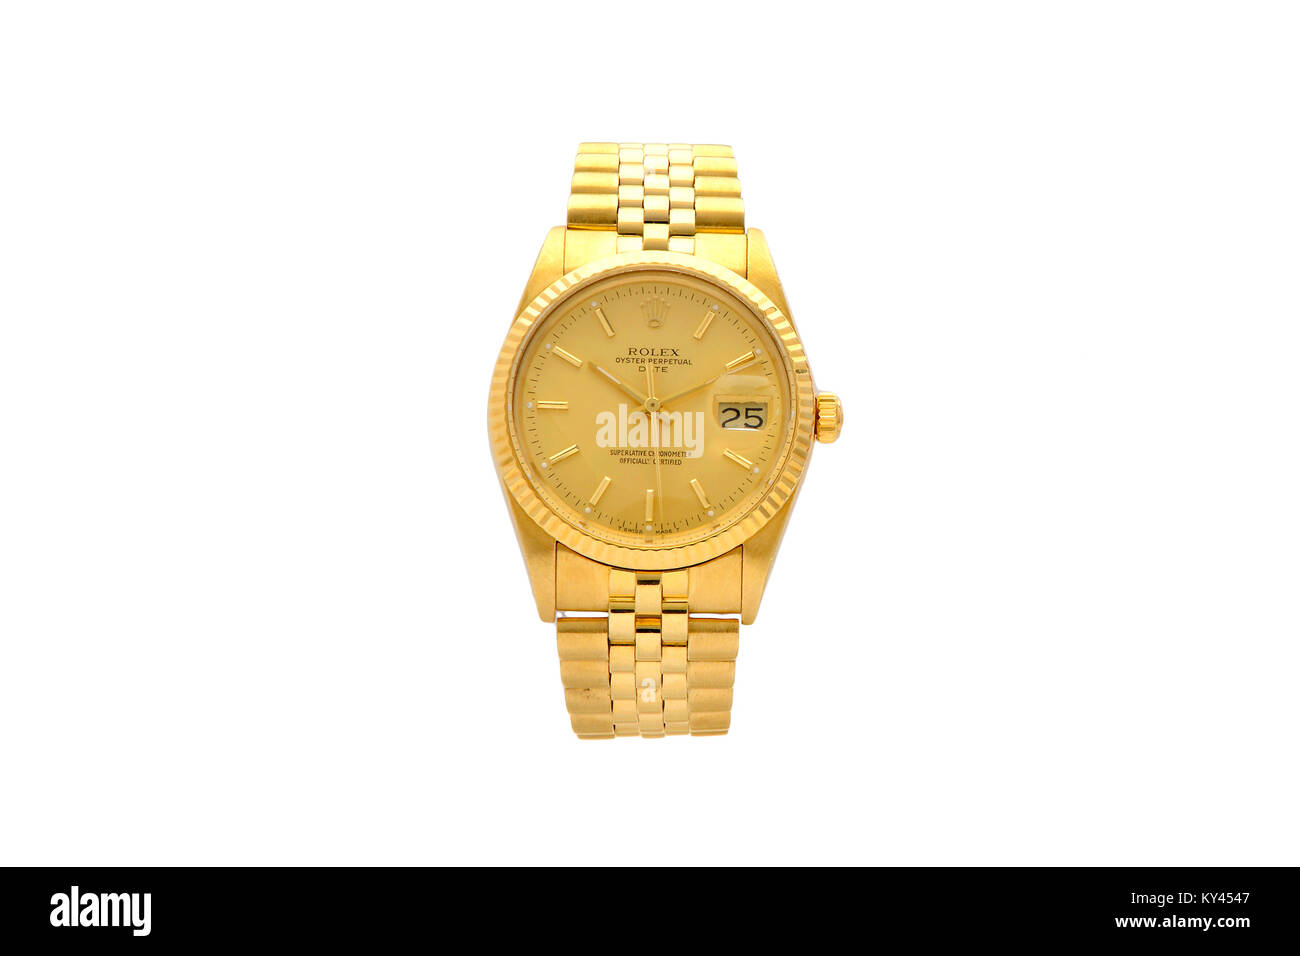 Rolex Oyster oro reloj de hombre con cara de oro Foto de stock